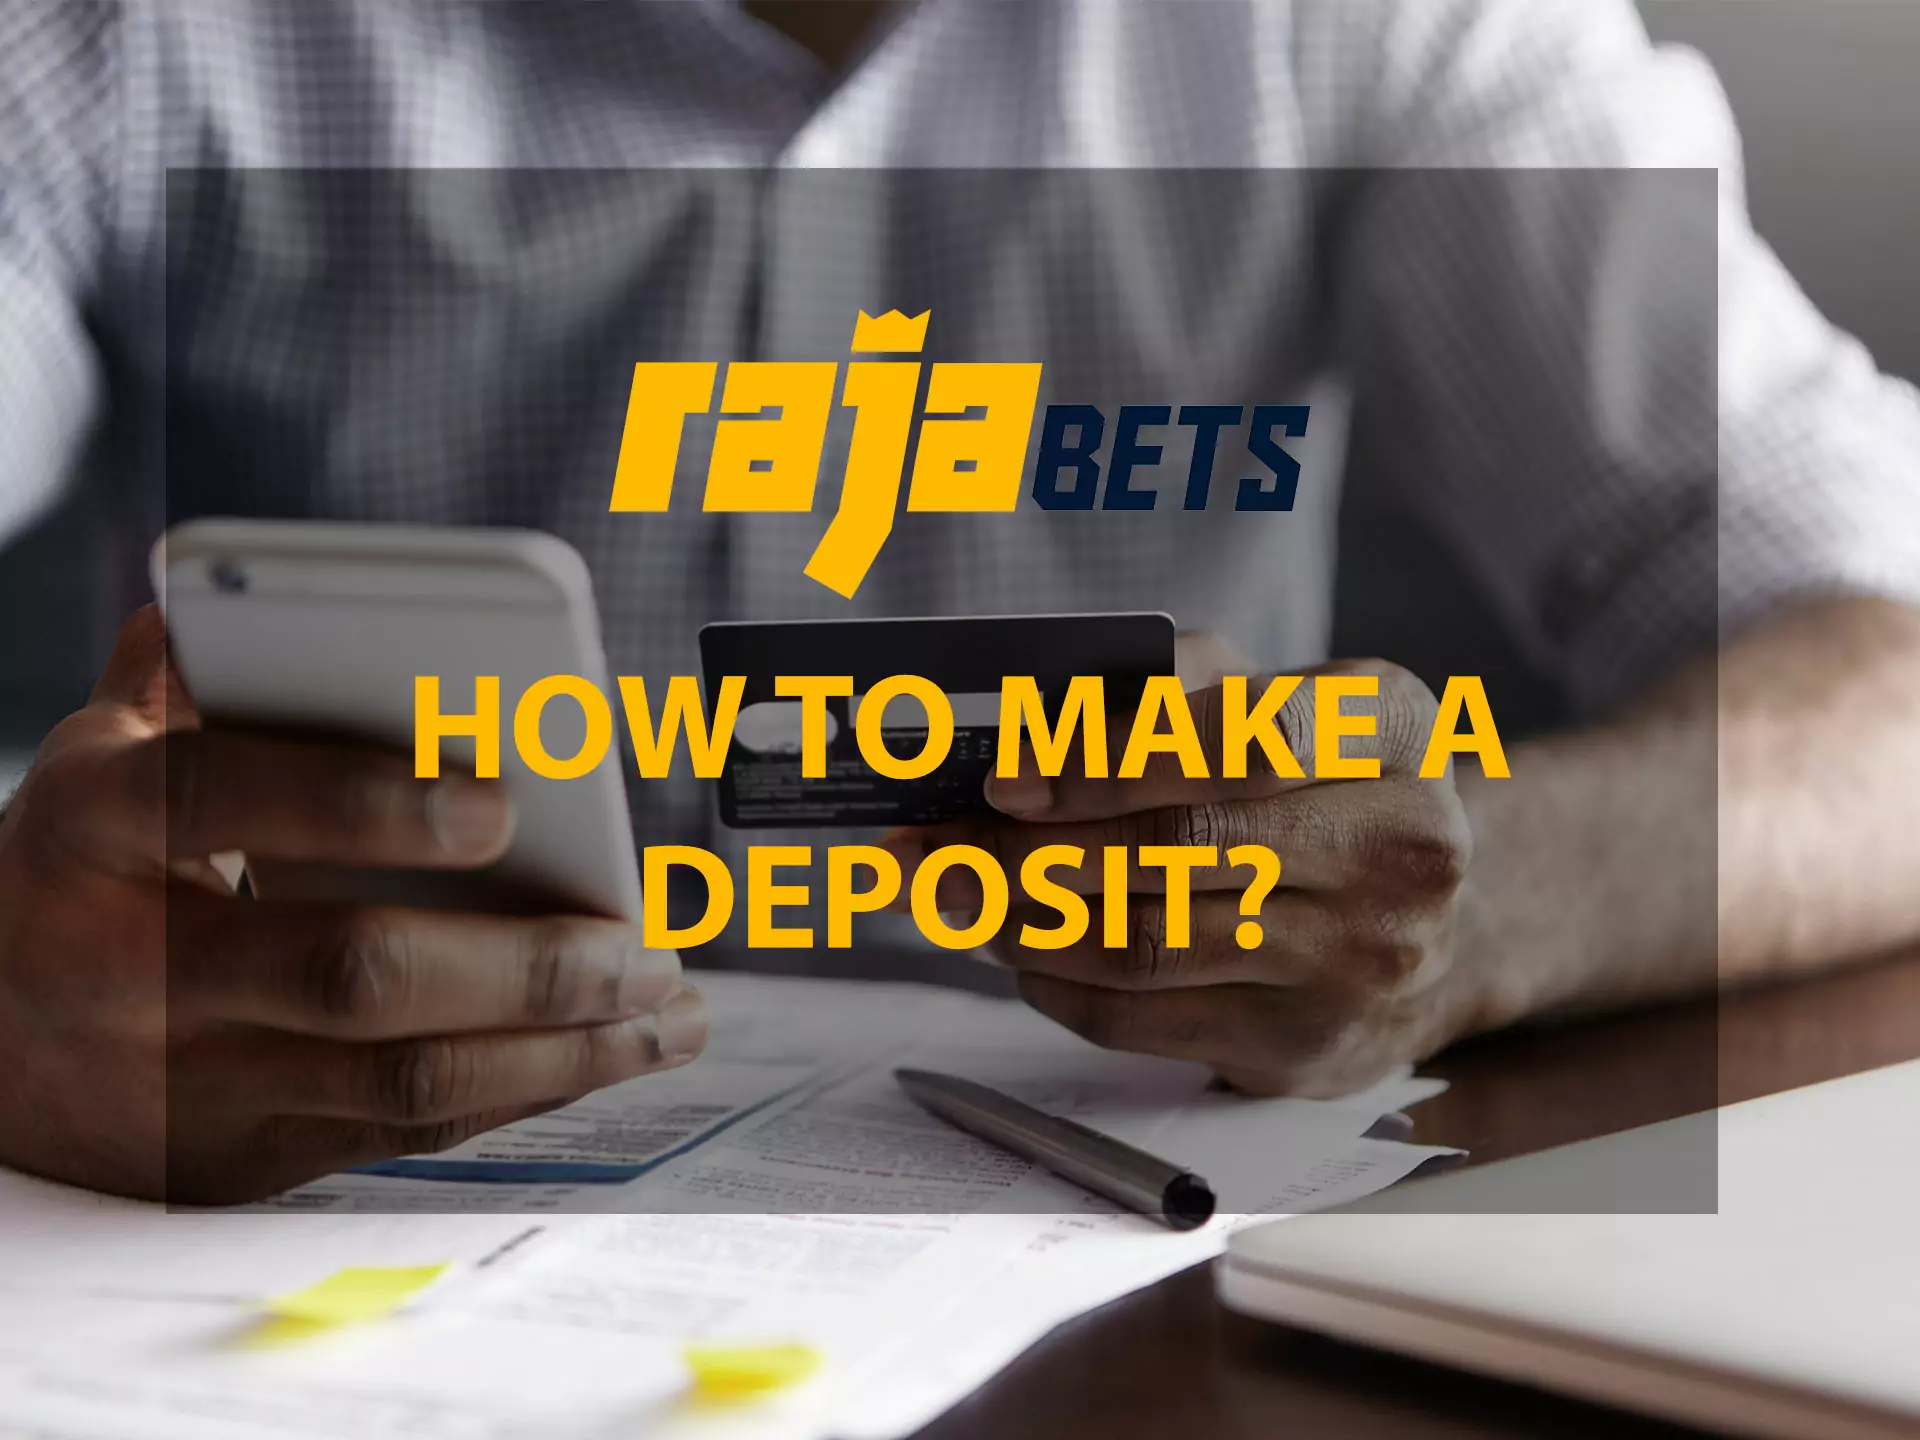 Choose the most convenient deposit method.